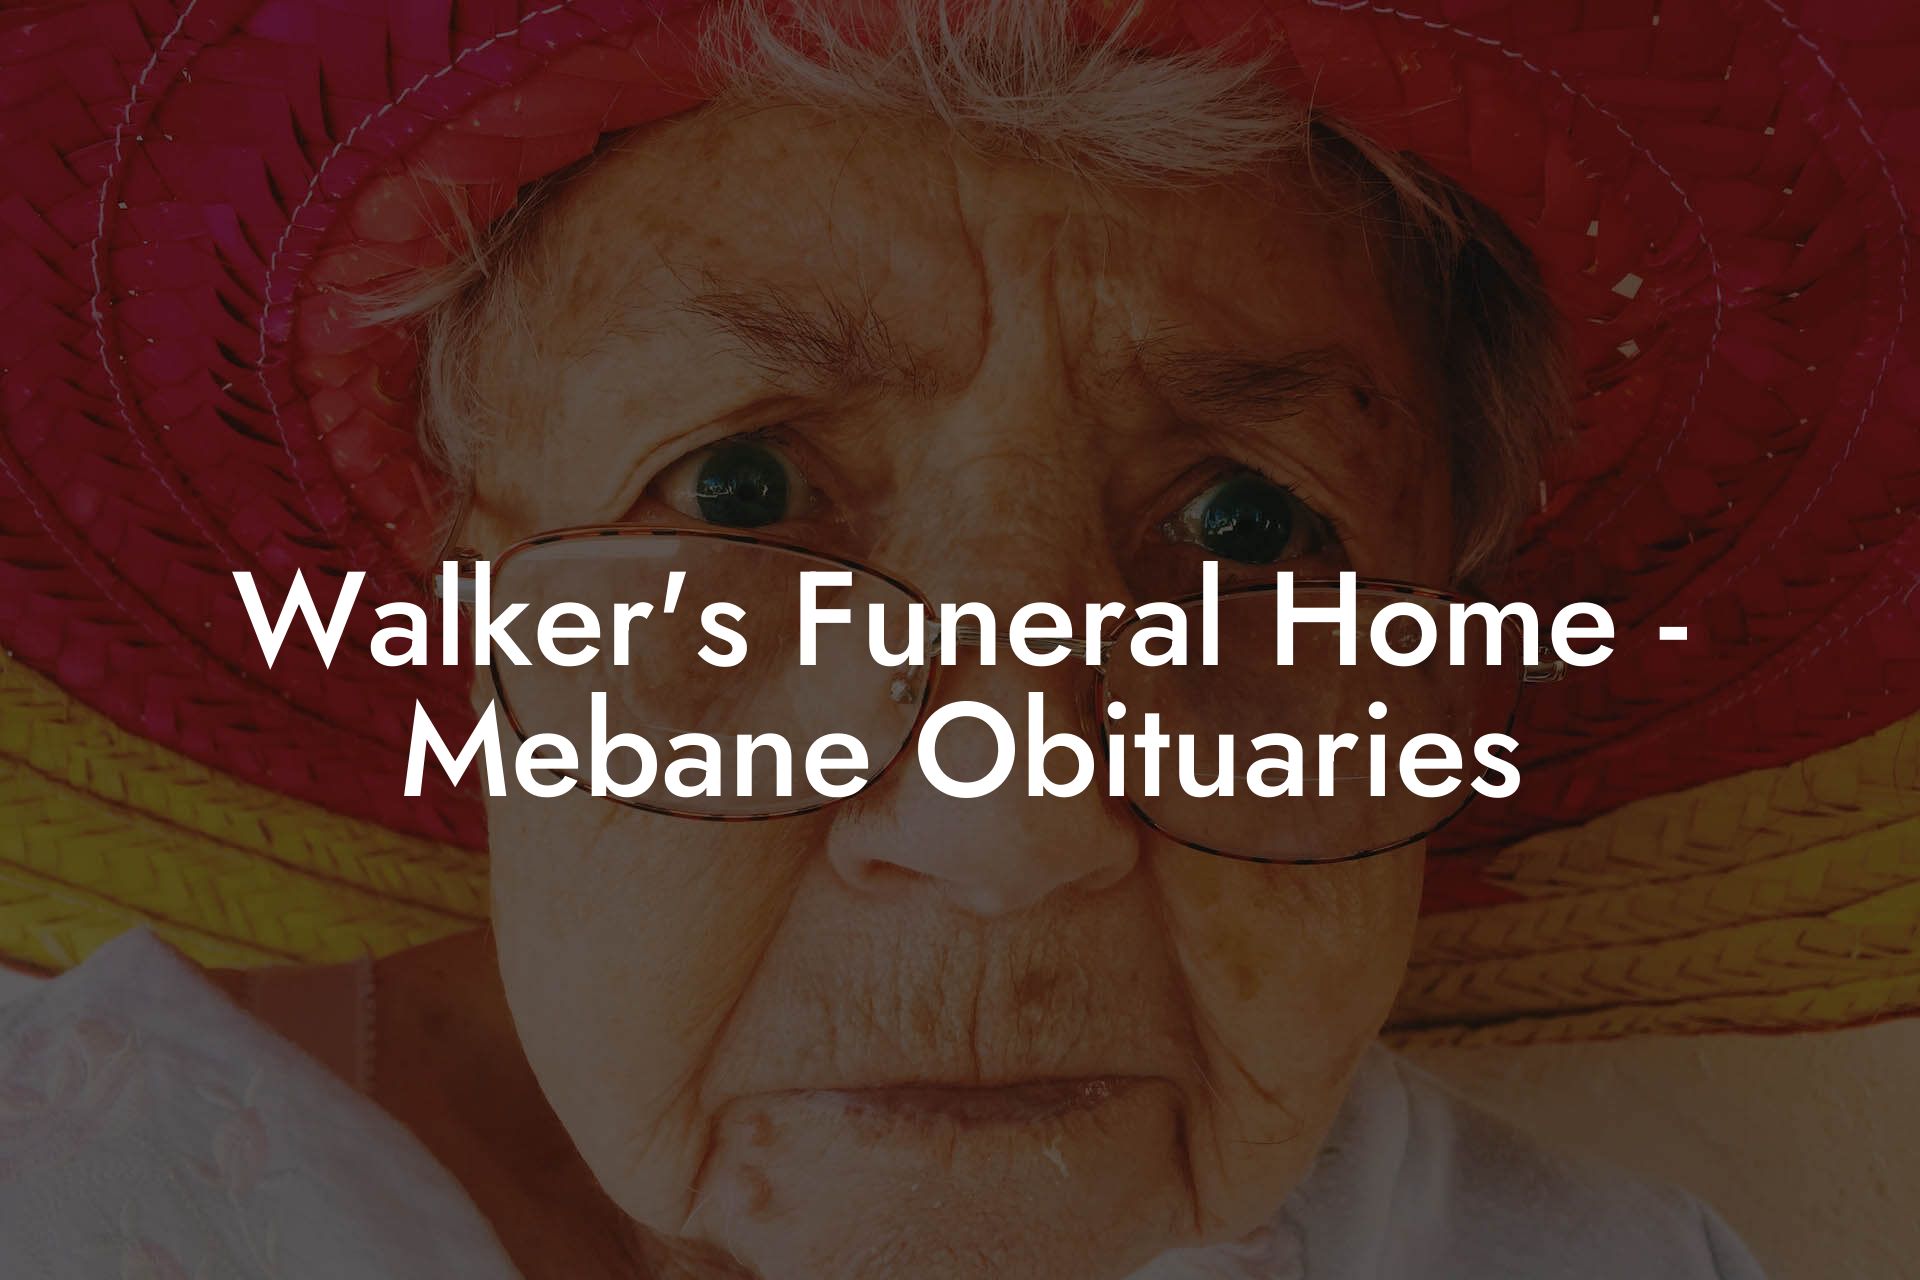 Walker's Funeral Home - Mebane Obituaries